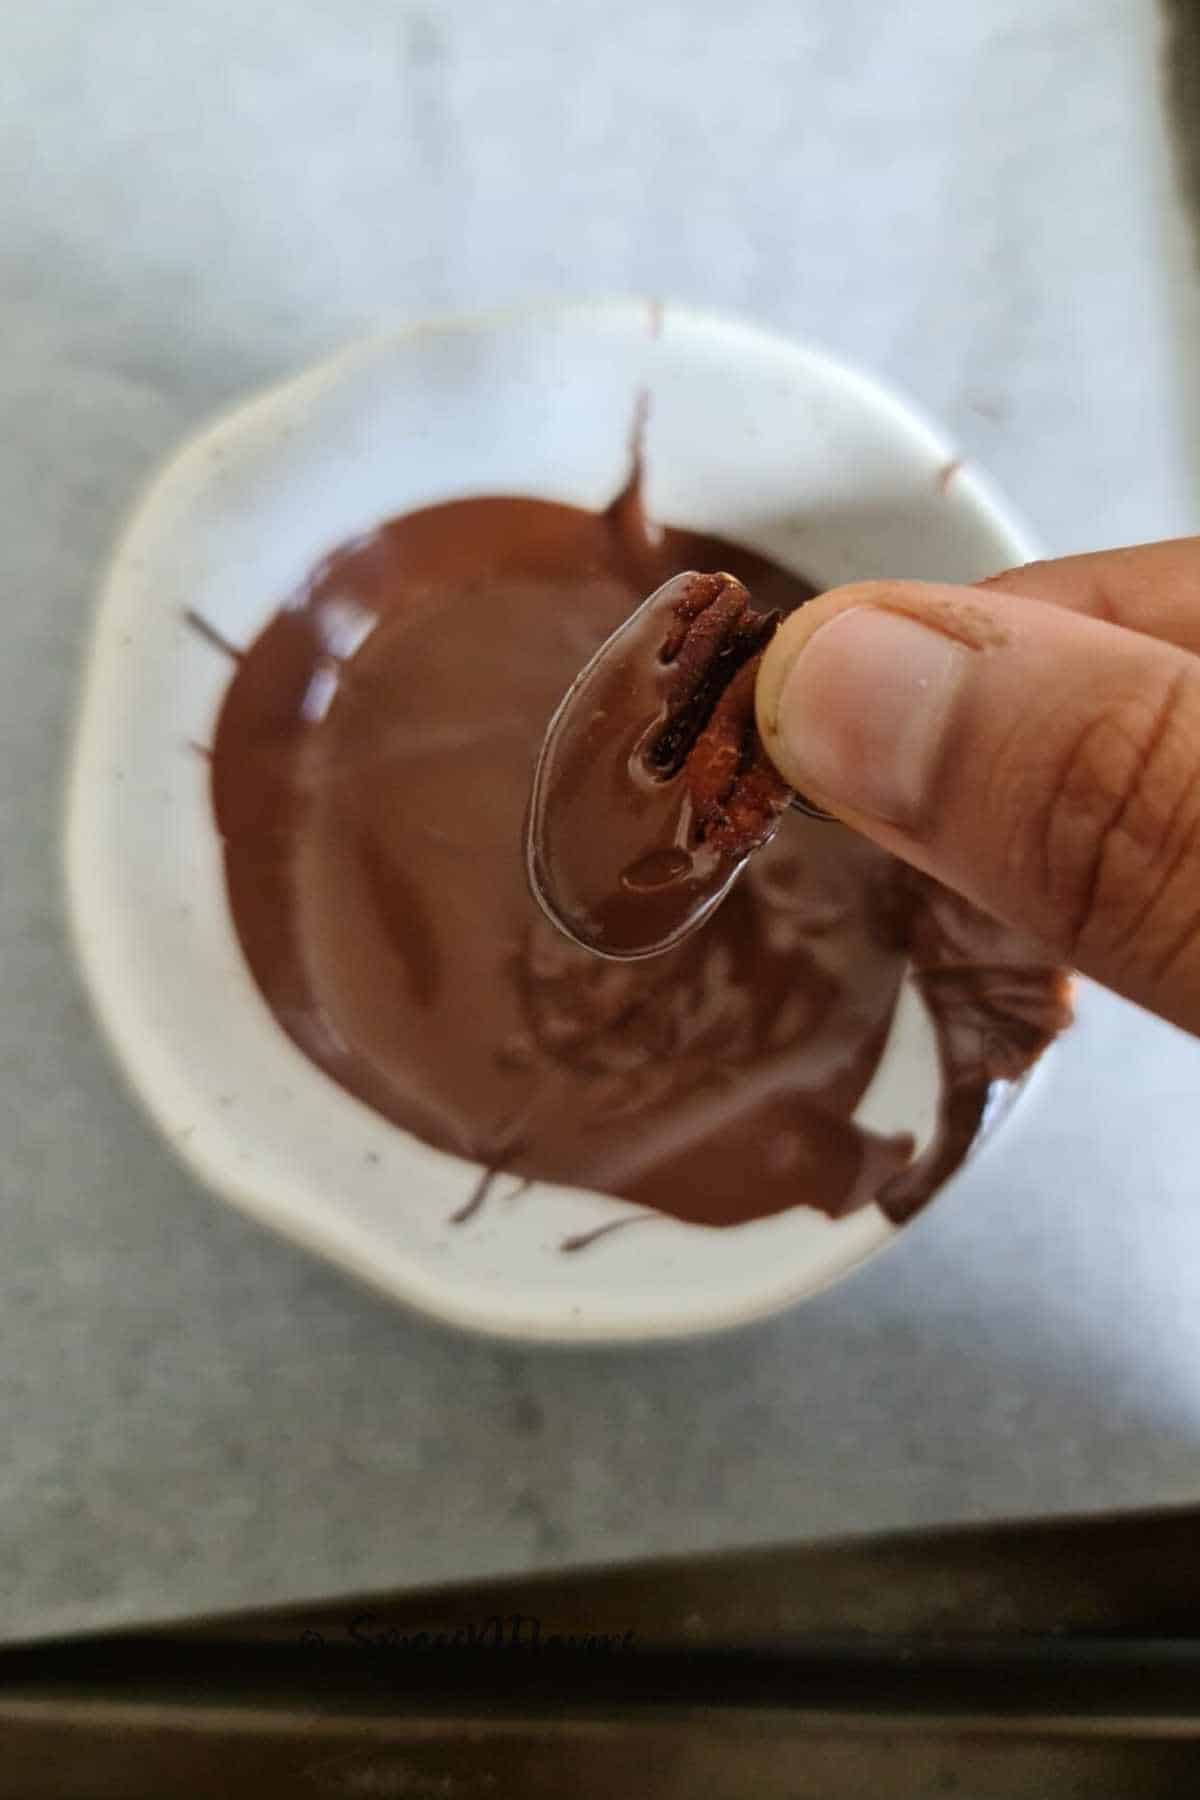 dip pecans into chocolate